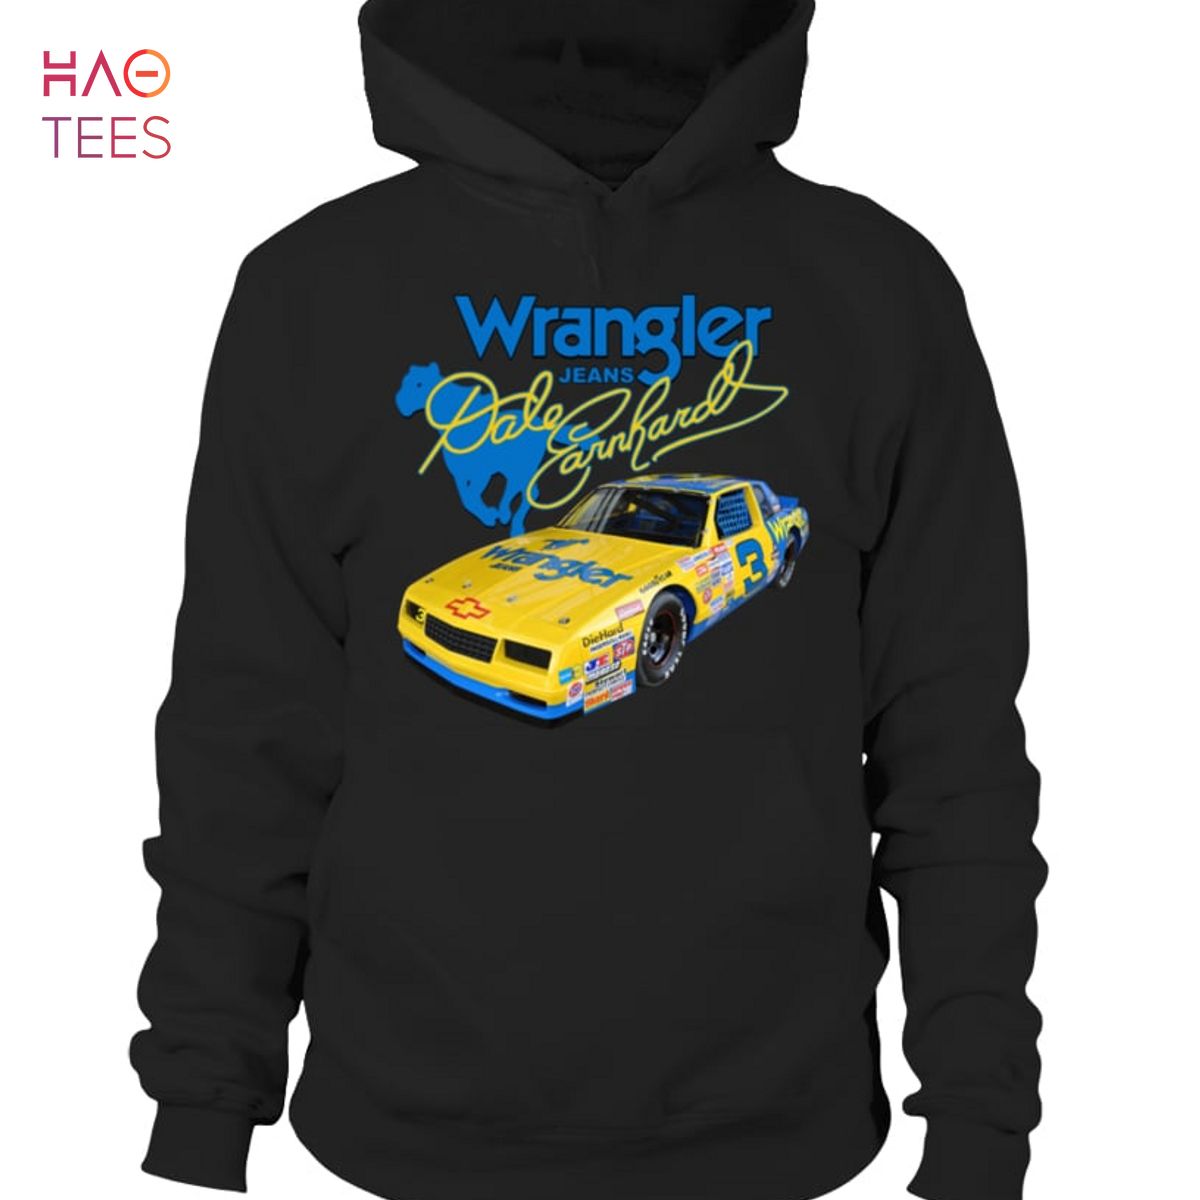 Wrangler Jeans Dale Earnhardt Shirt Limited Edition